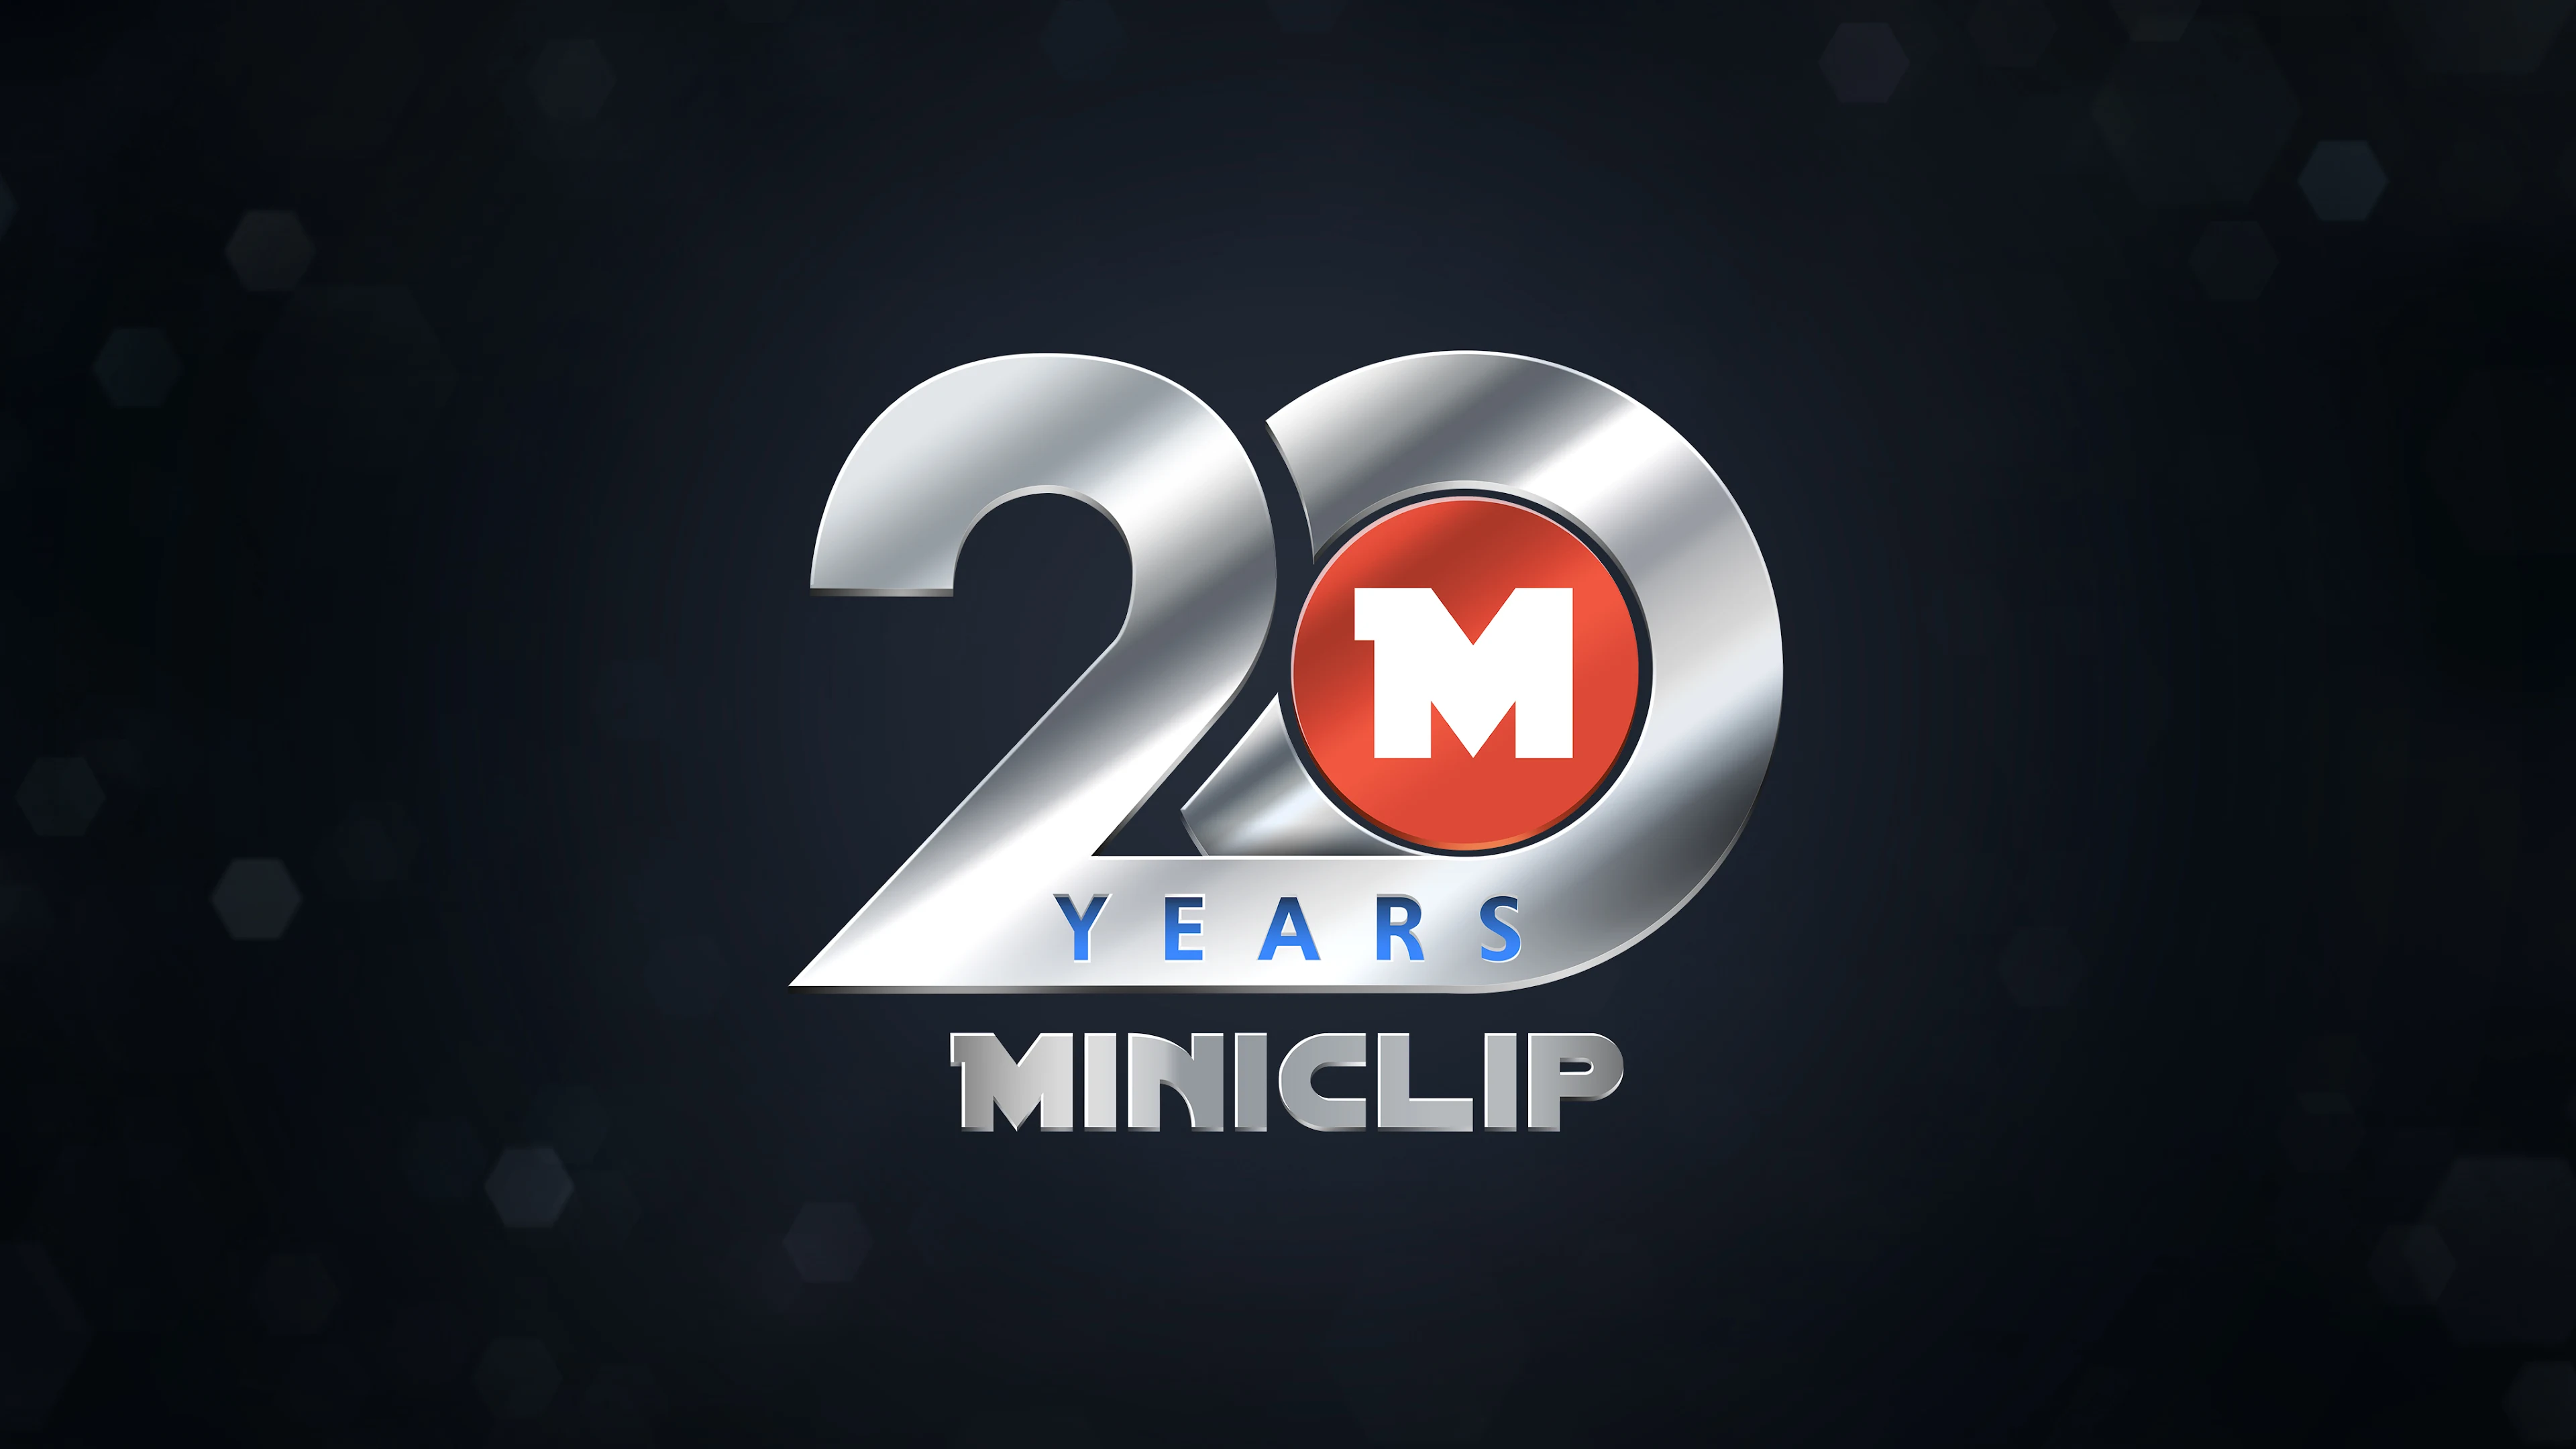 Games - Miniclip